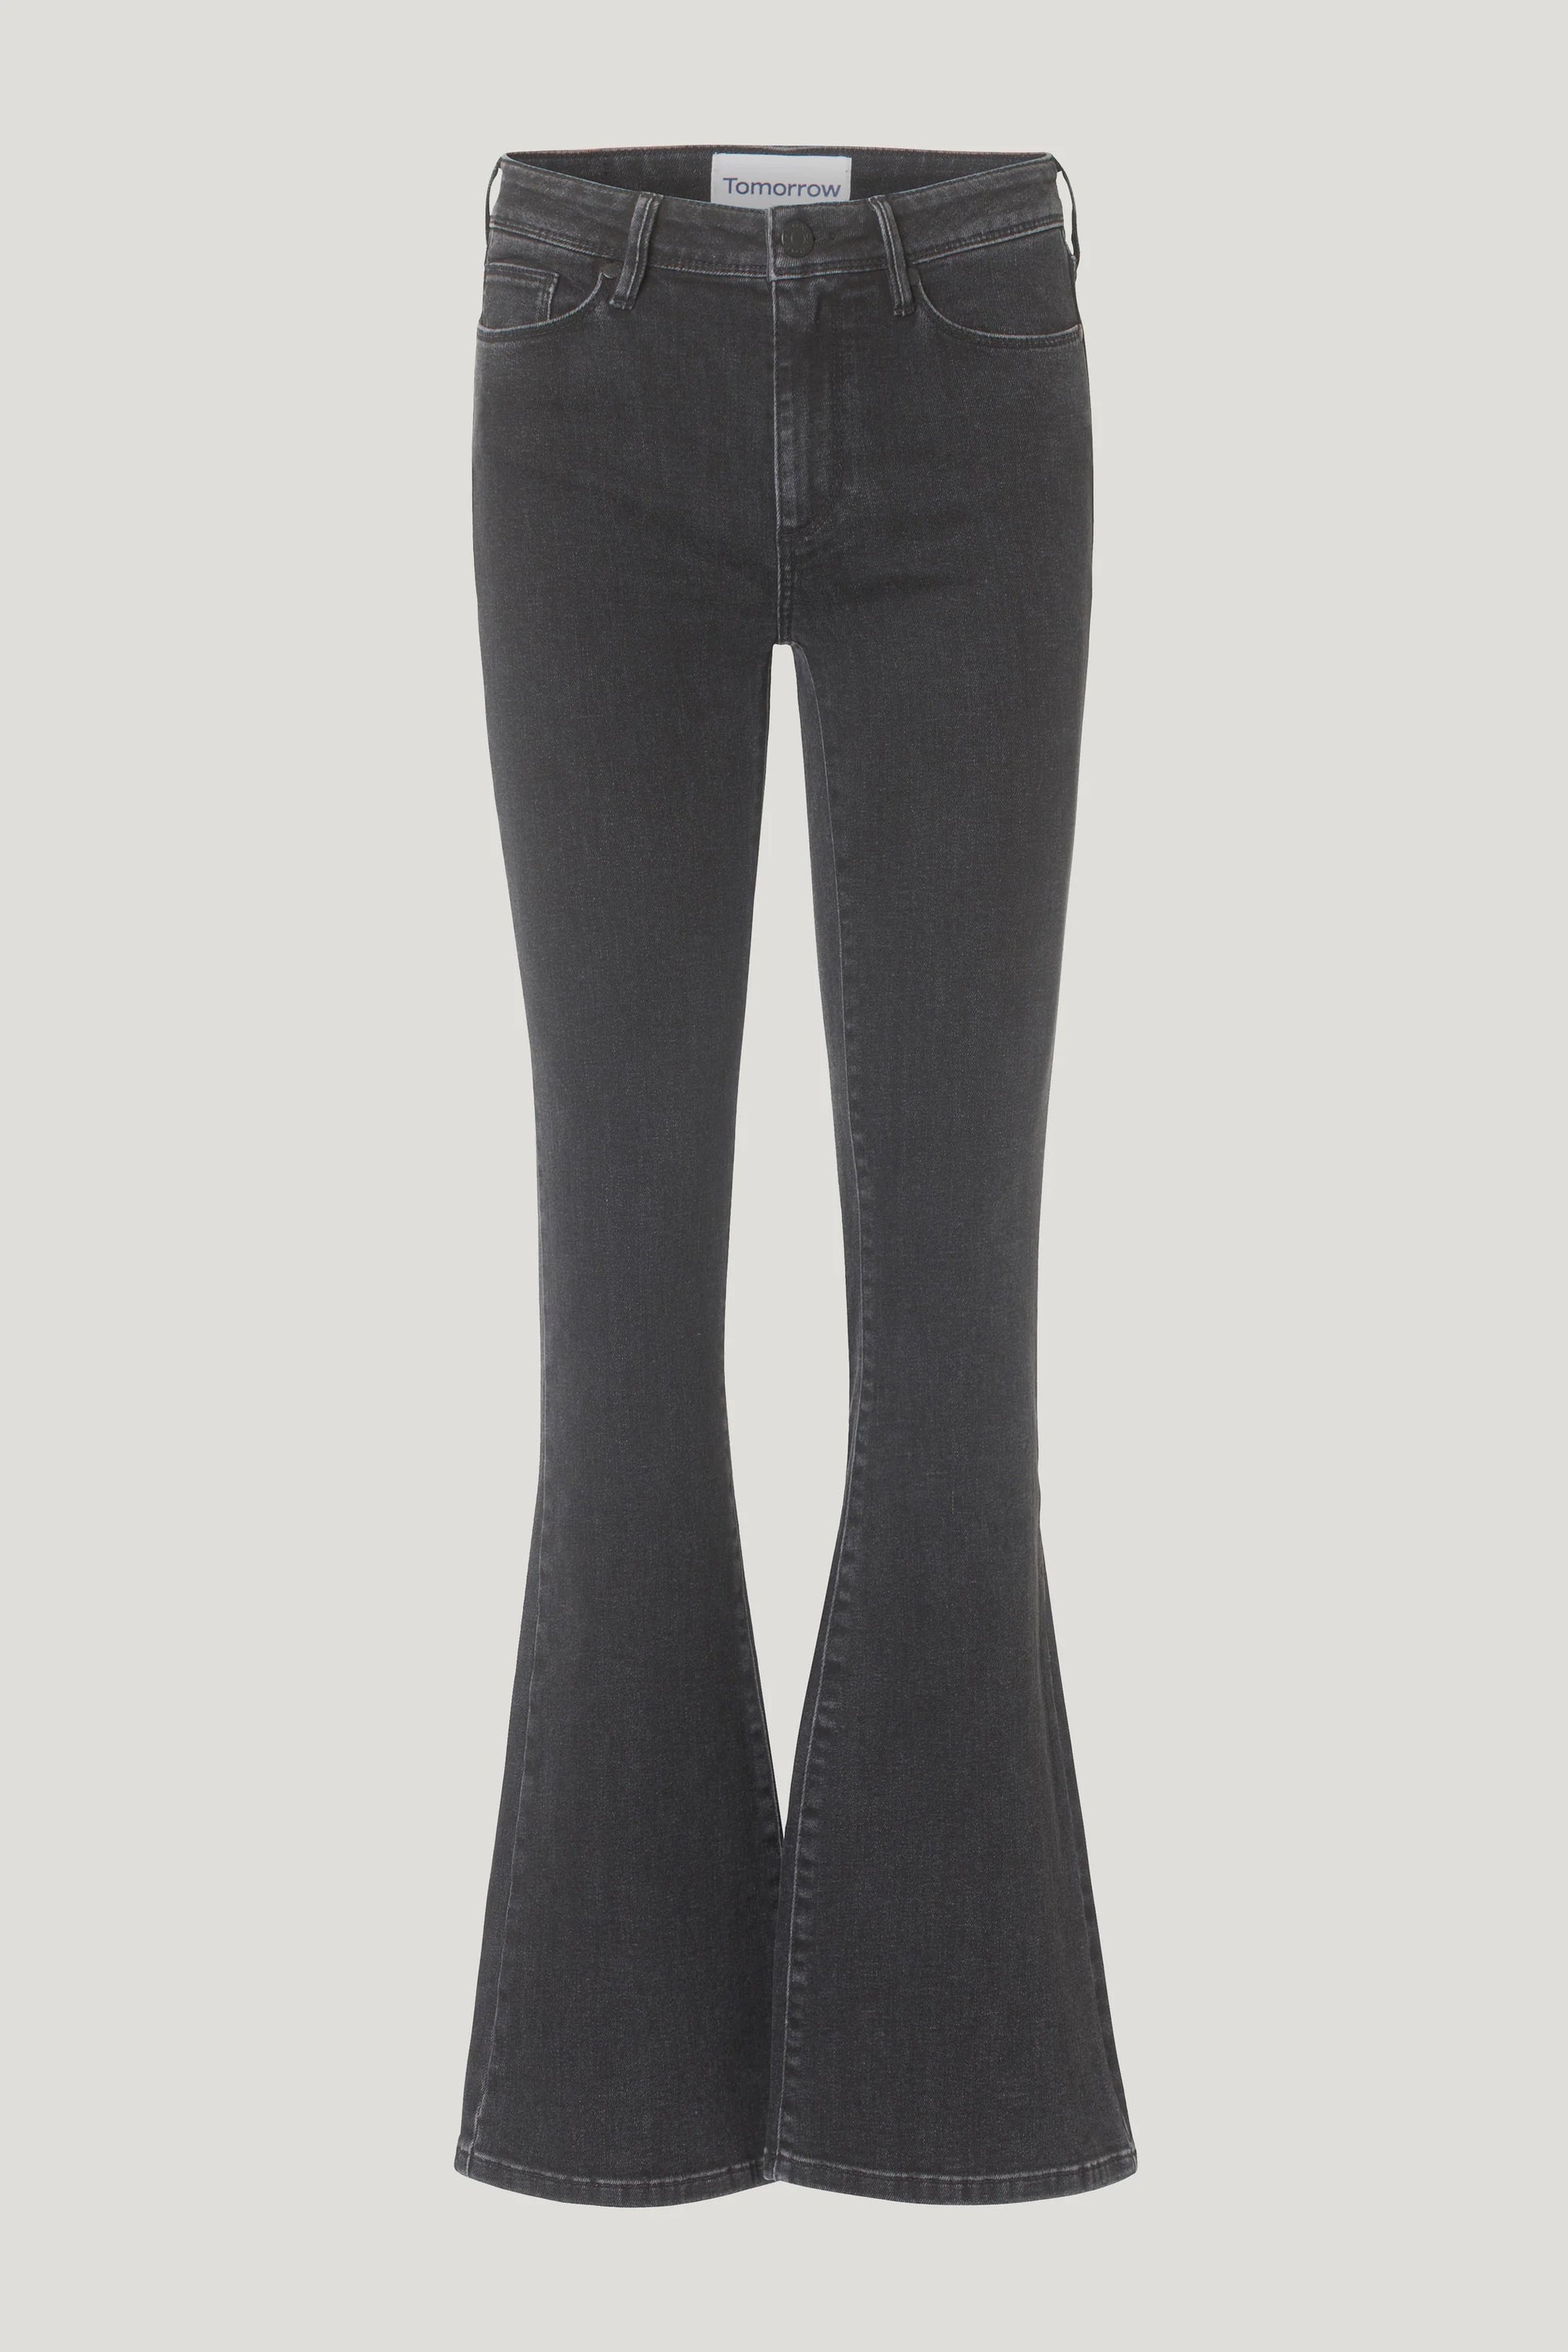 A pair of Albert Flare - Original Black high-waist jeans with a flared hem by Tomorrow Denim.